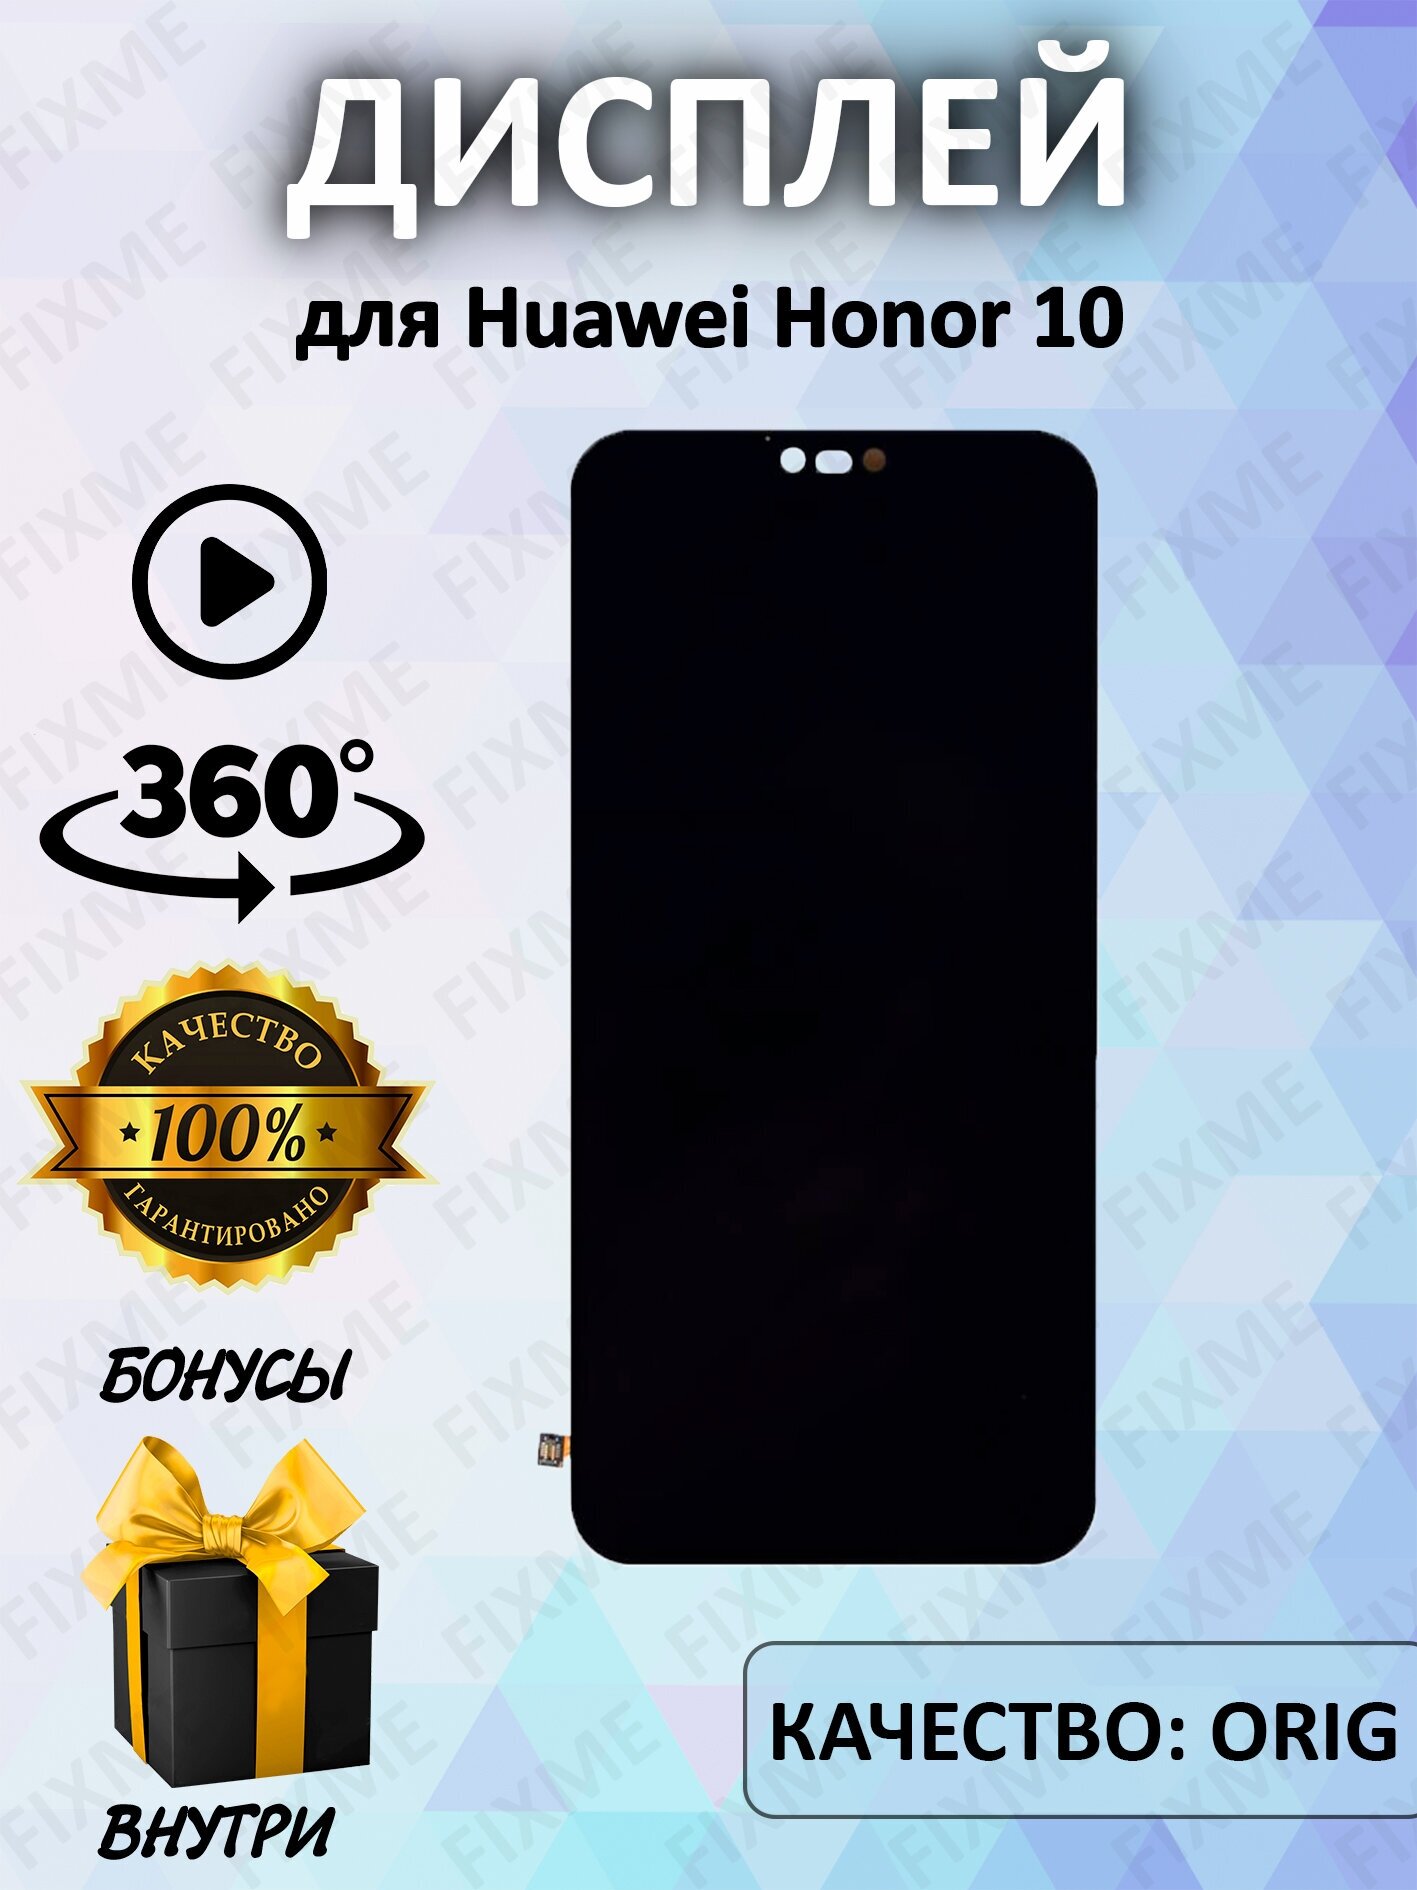 Дисплей для Huawei Honor 10 - 100 % LCD с отпечатком пальца, черный